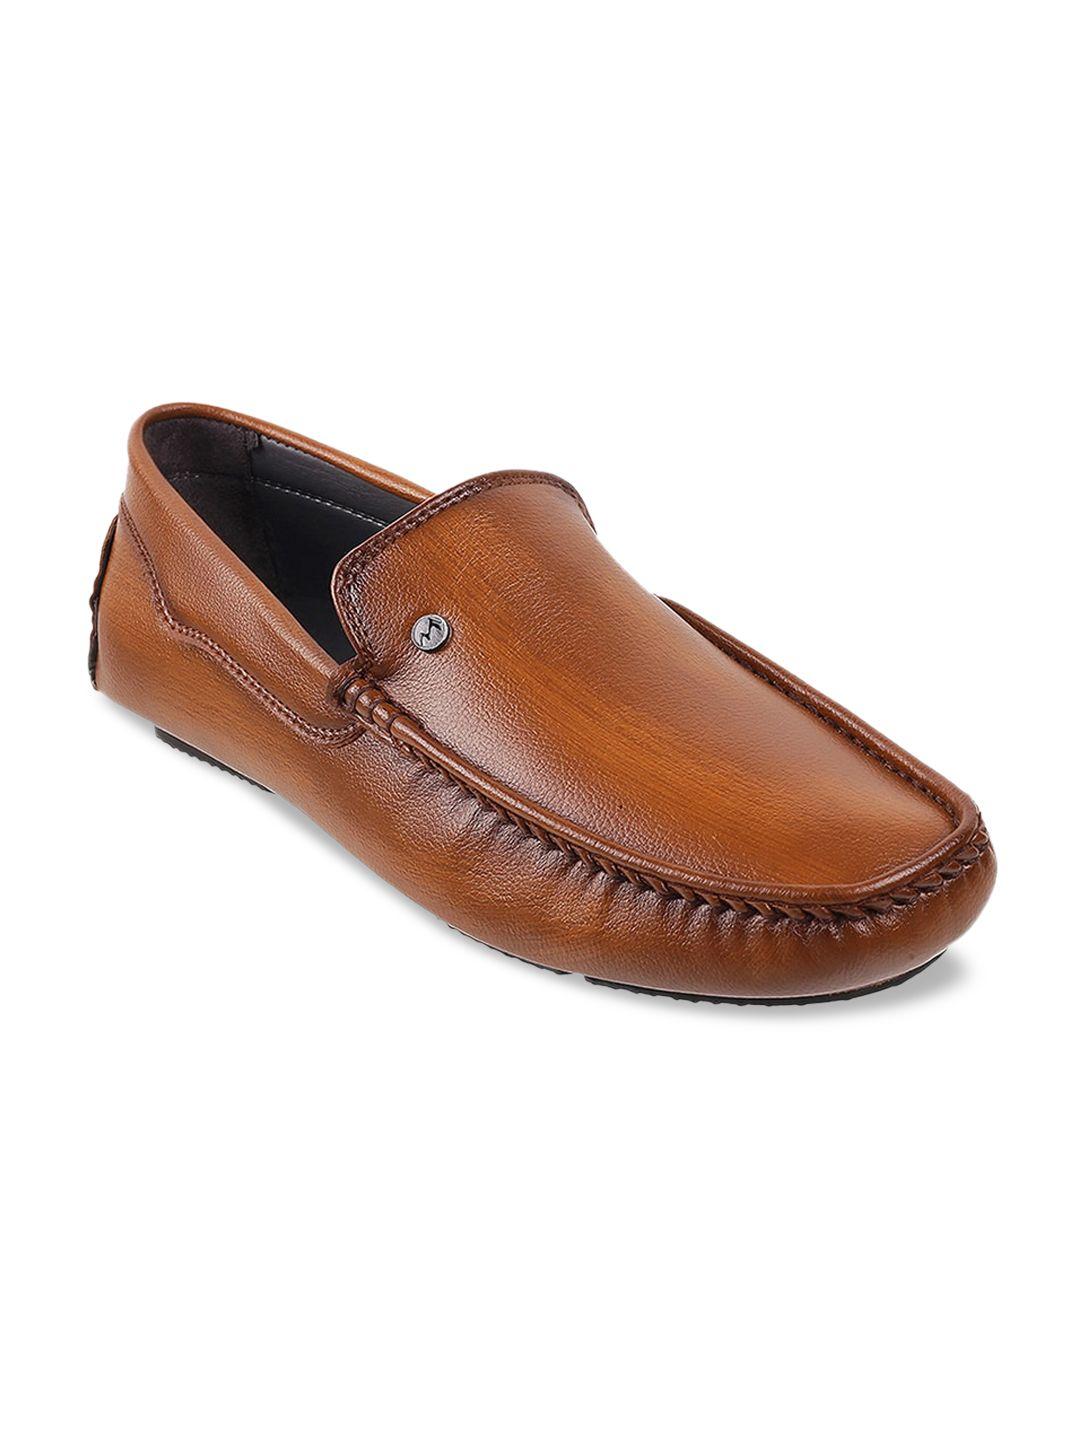 metro-men-tan-leather-loafers